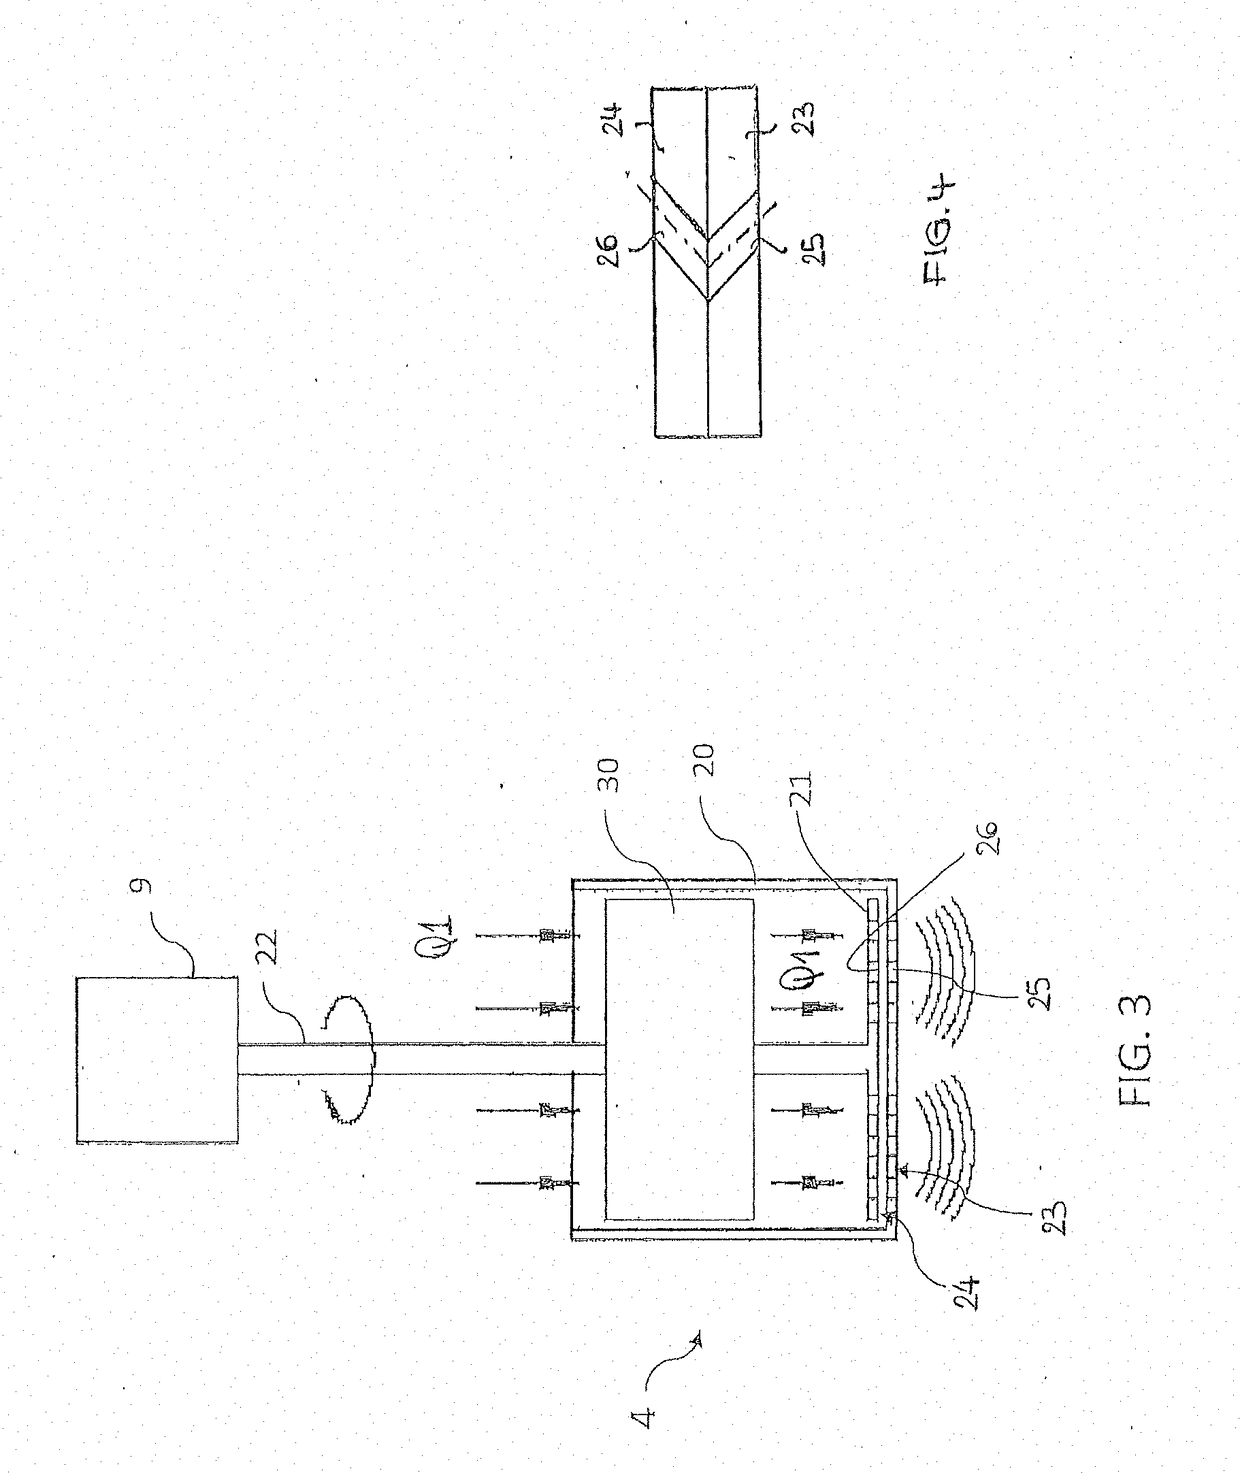 Apparatus and method for prilling a liquid, preferably urea melt